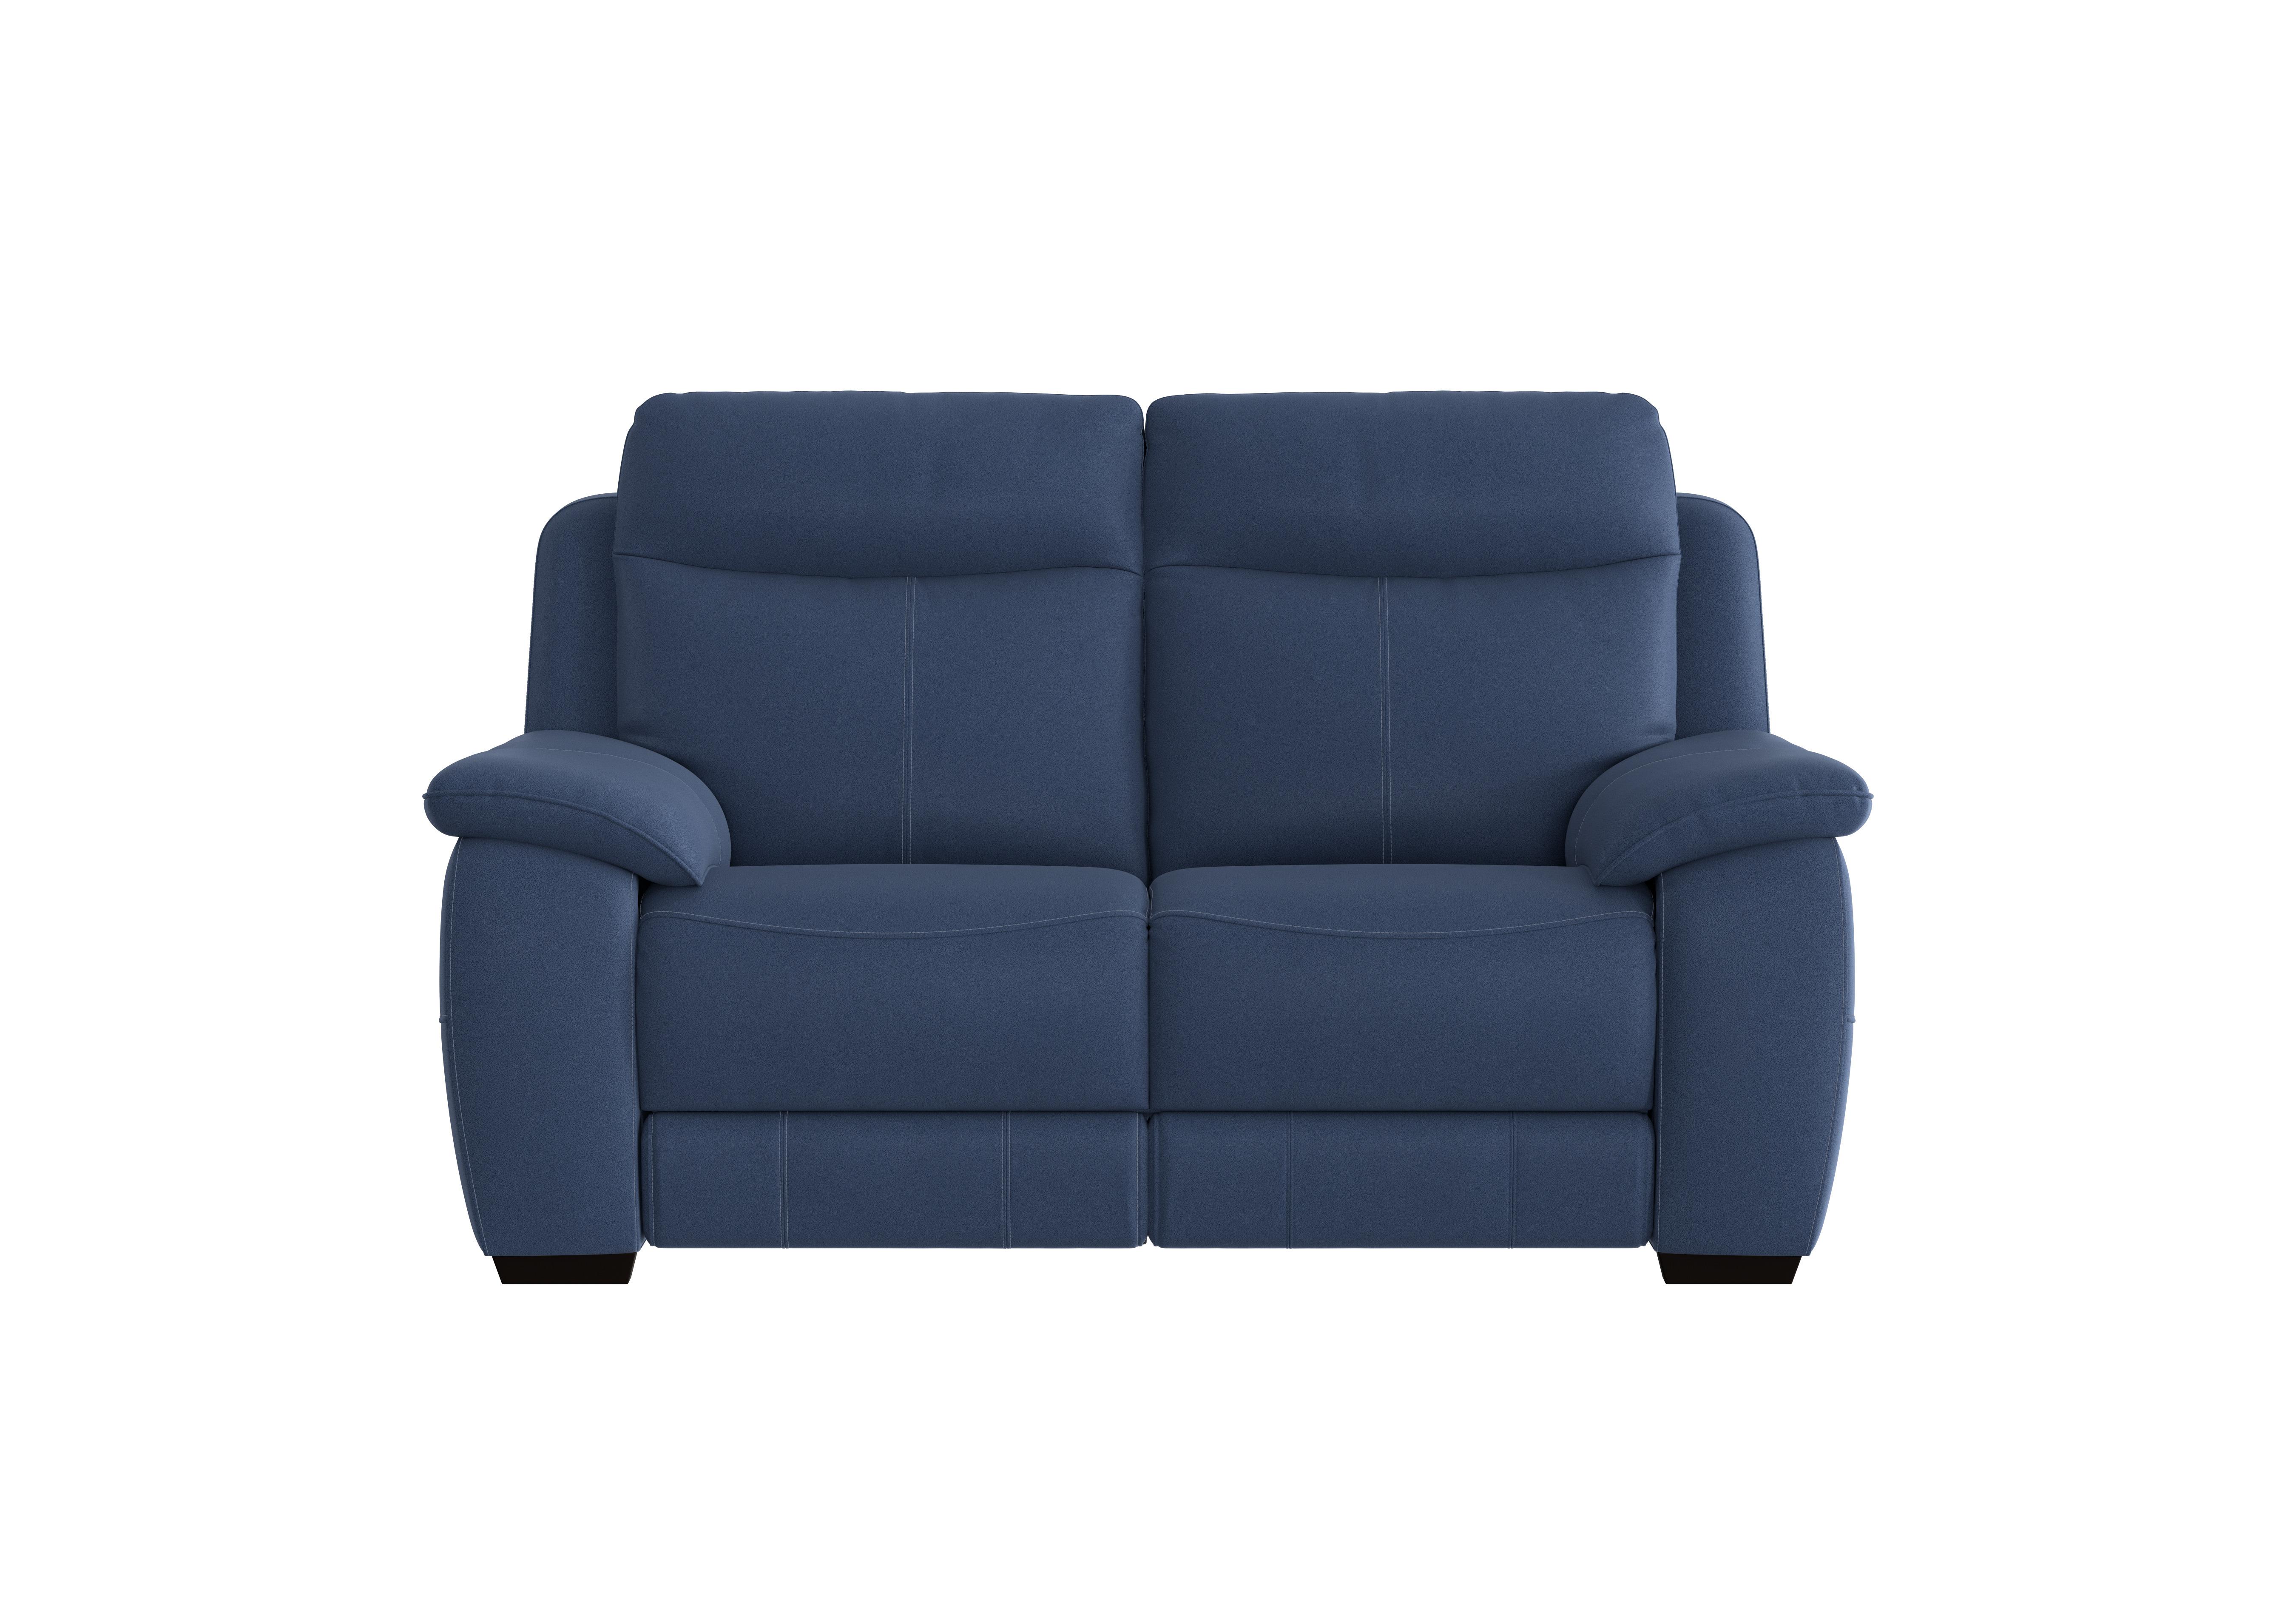 Starlight Express 2 Seater Fabric Sofa in Bfa-Blj-R10 Blue on Furniture Village